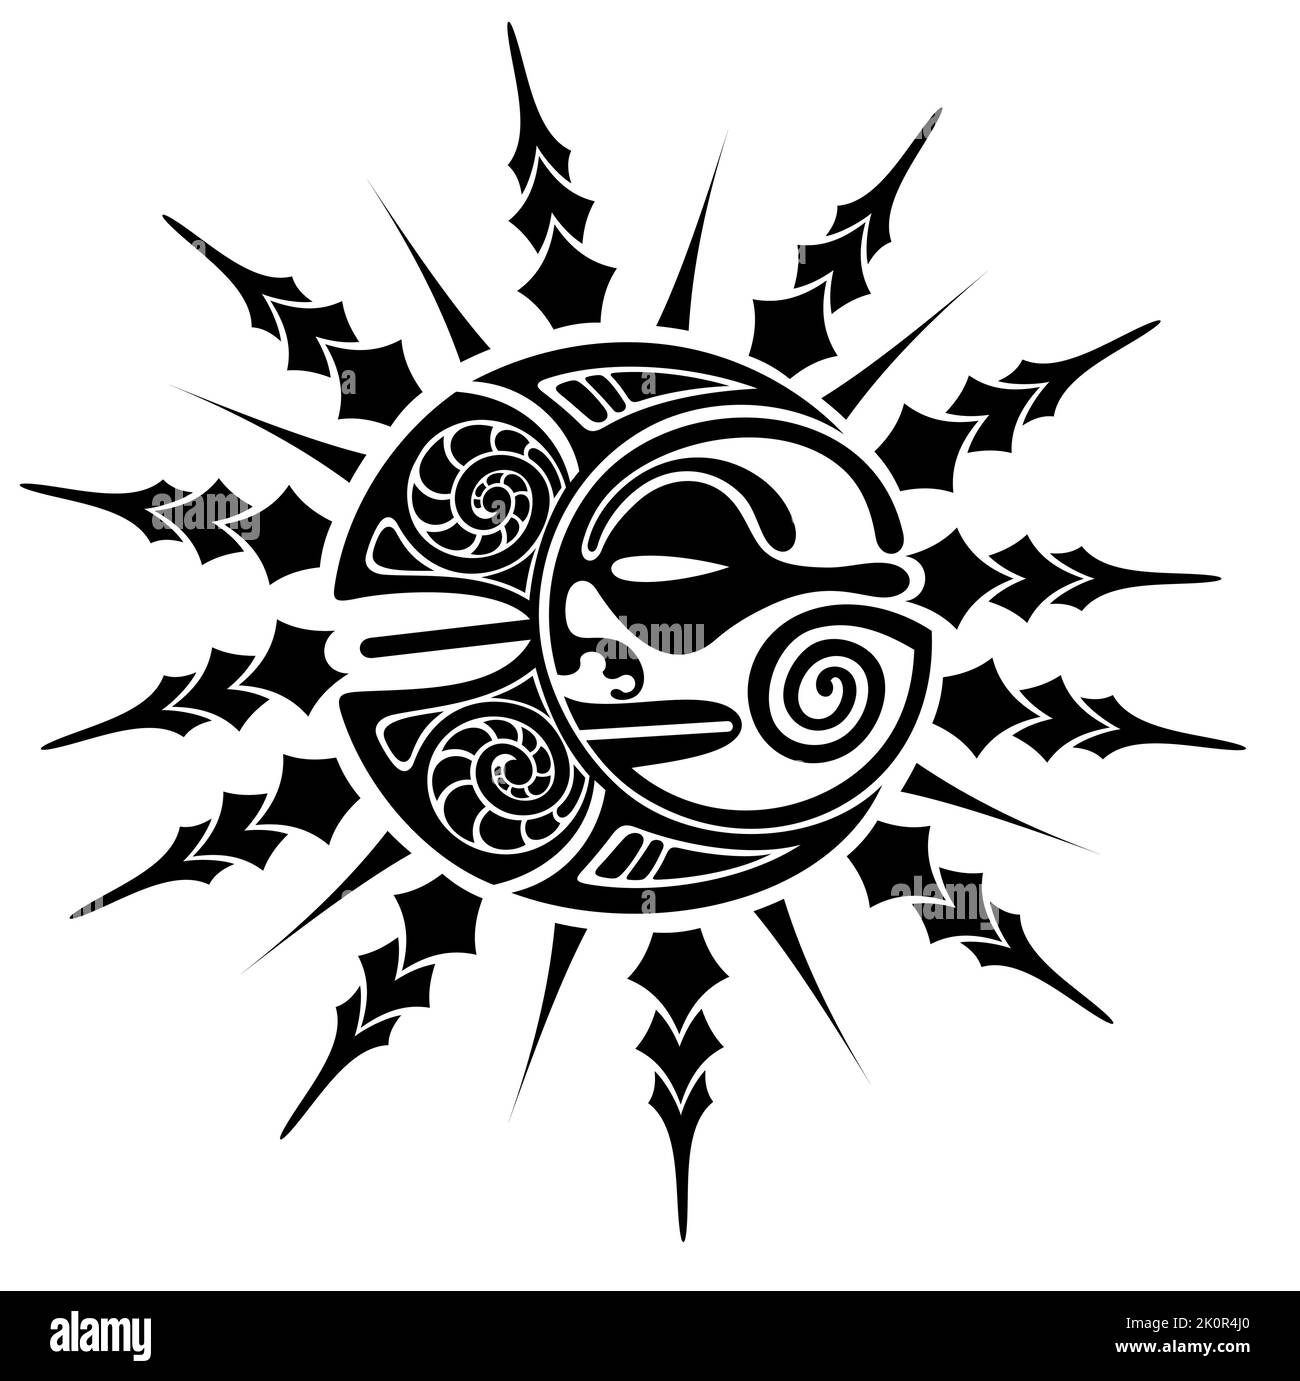 Tattoo-Skizze im maori-Stil von Sonne und Mond. Rundes Tribal-Ornament.. Vektorgrafik Stock Vektor